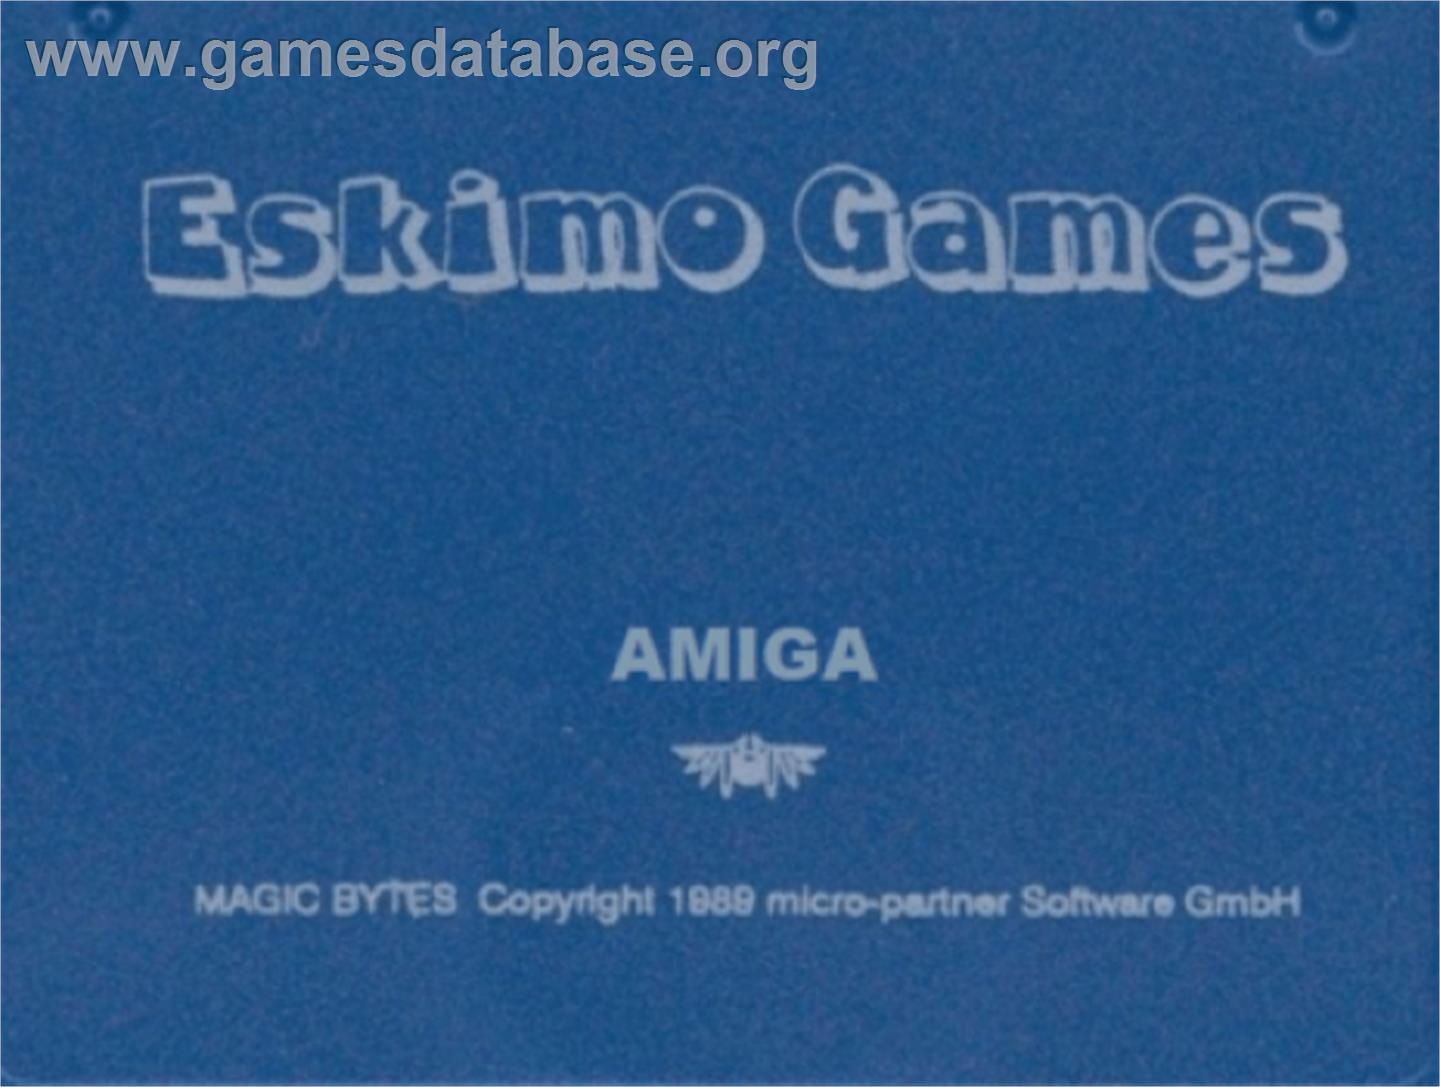 Eskimo Games - Commodore Amiga - Artwork - Cartridge Top